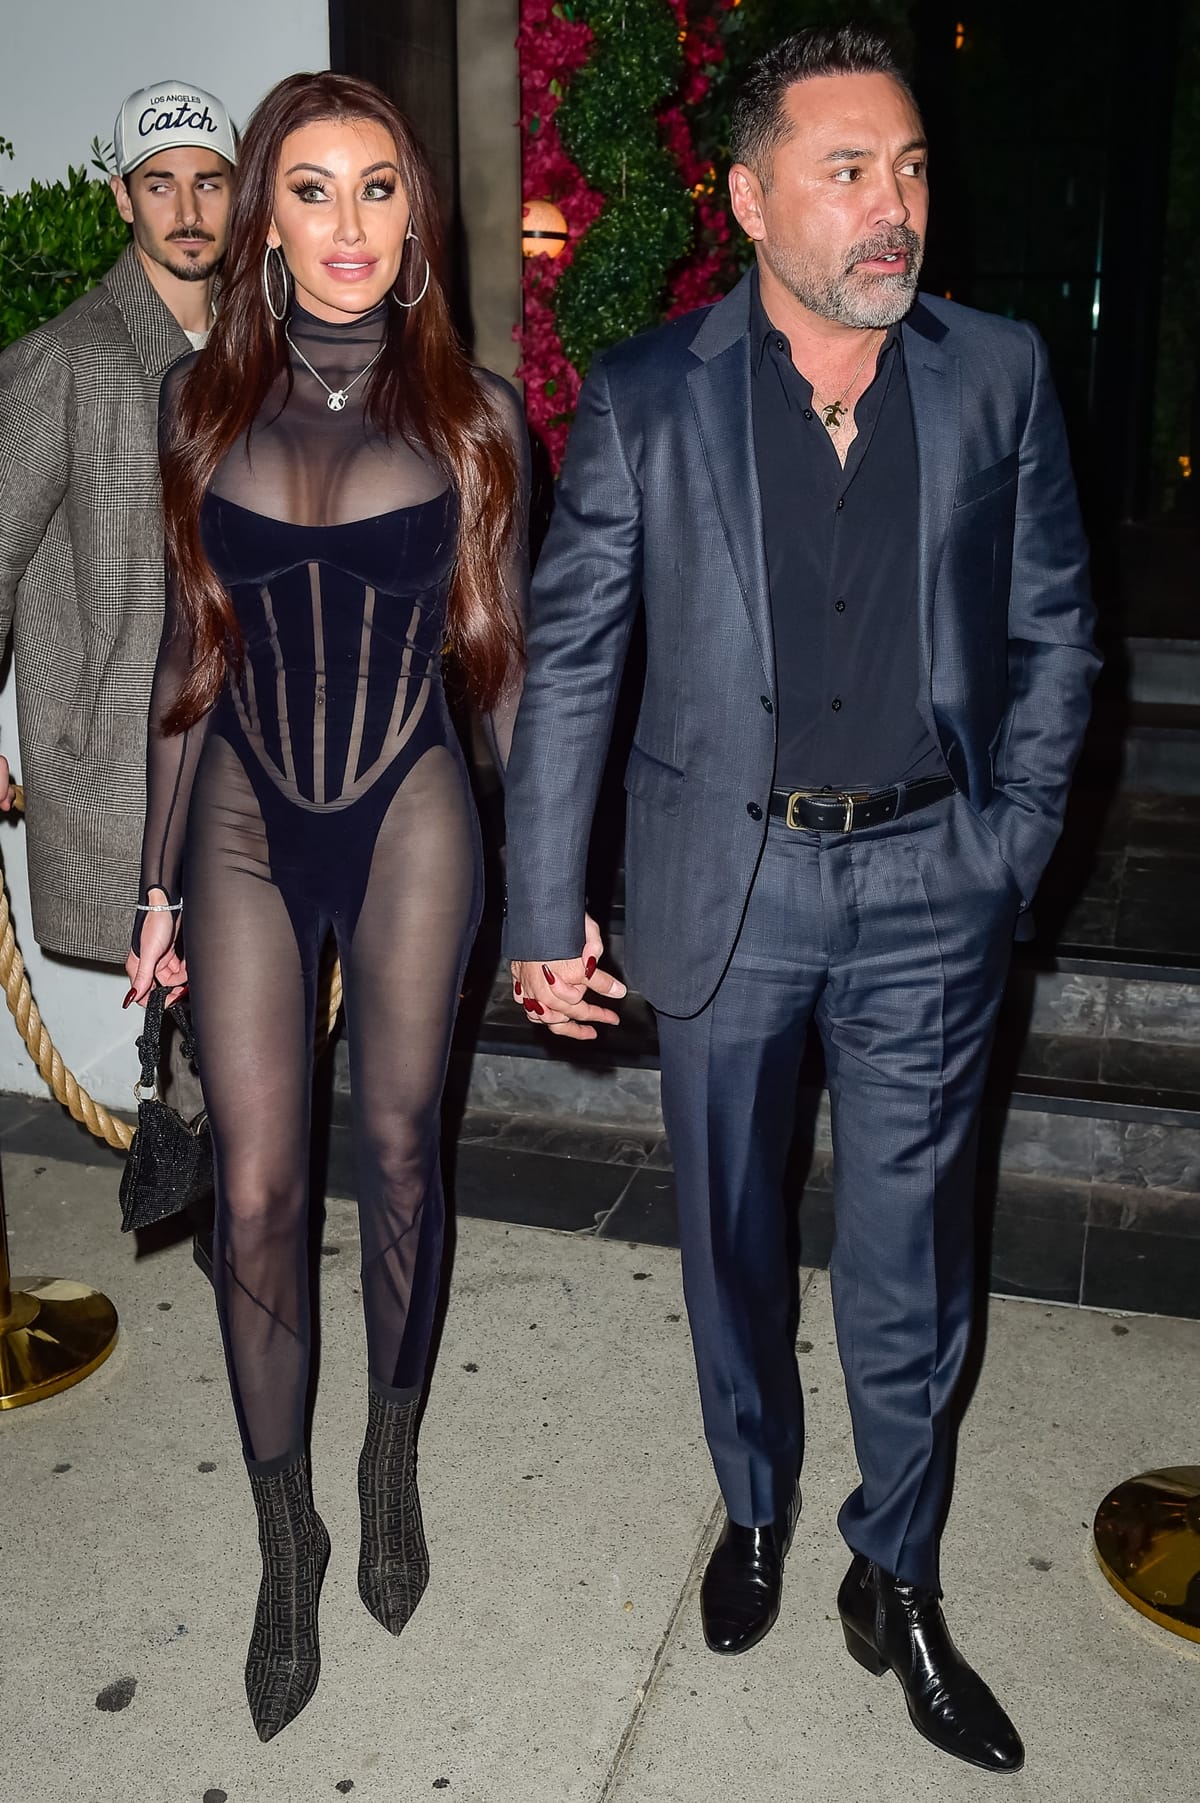 Oscar De La Hoya and his girlfriend Holly Sonders on a date